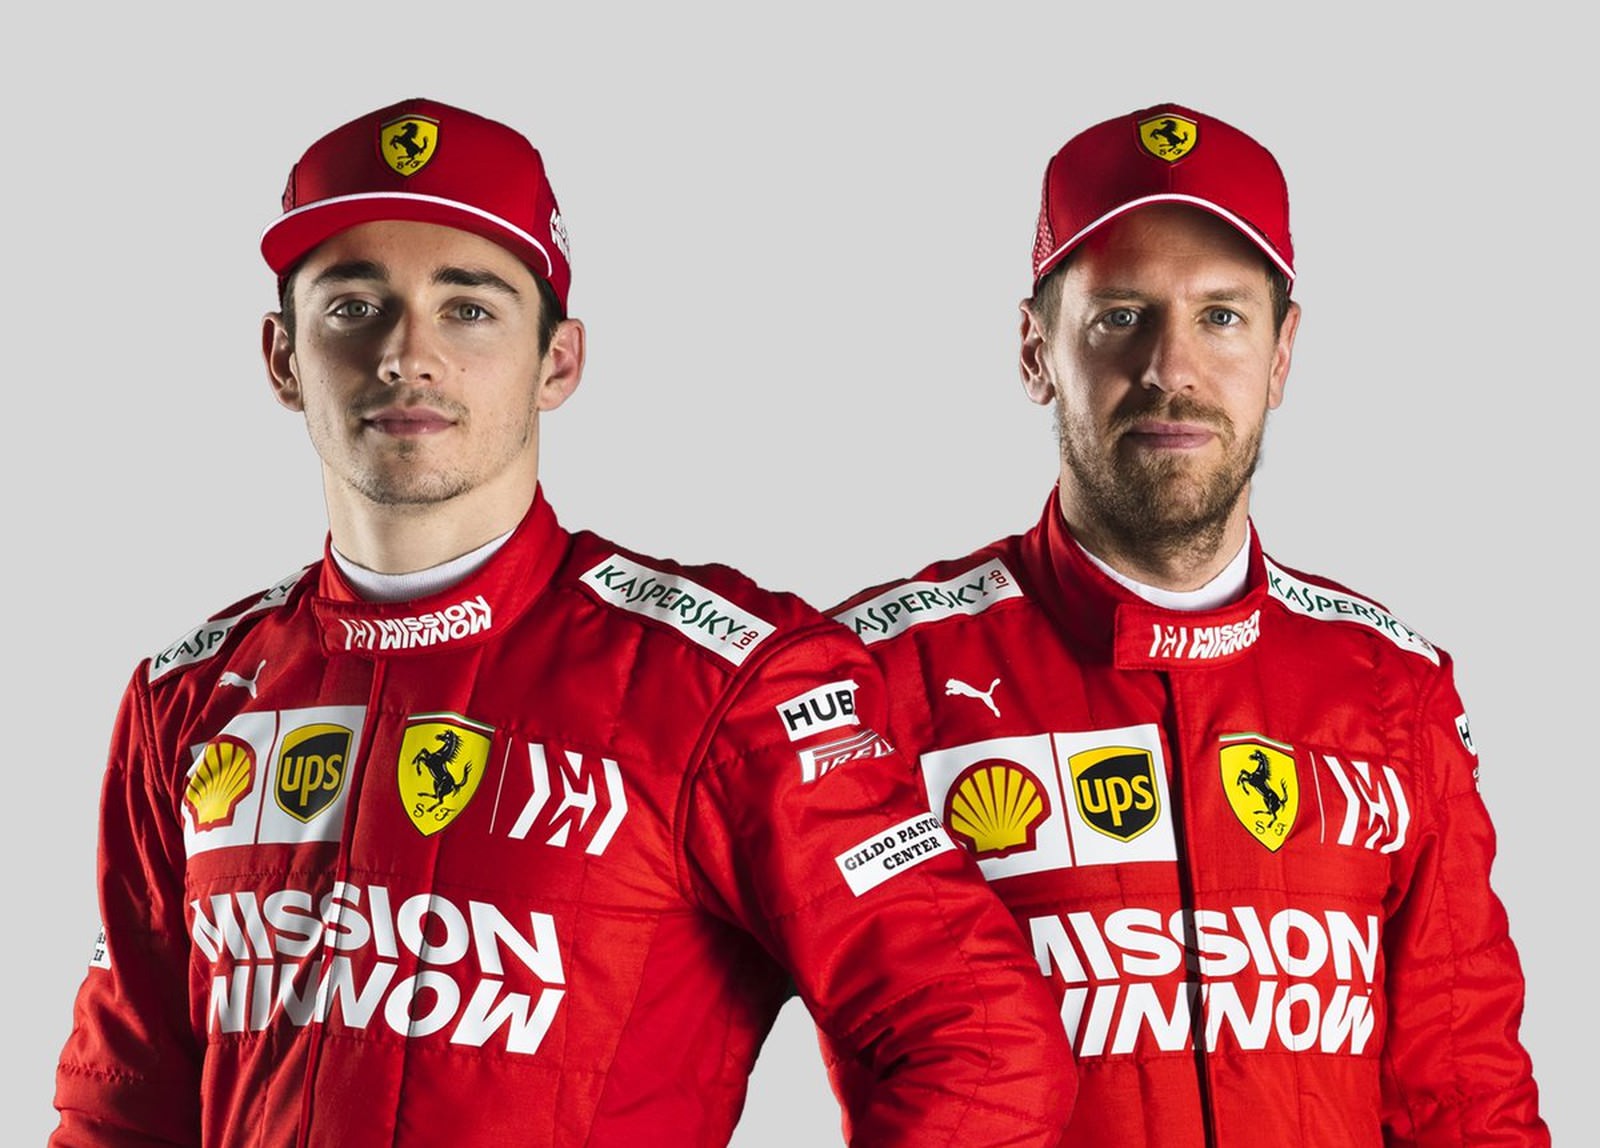 Ferrari evita encontro de Vettel e Leclerc após batida em Interlagos